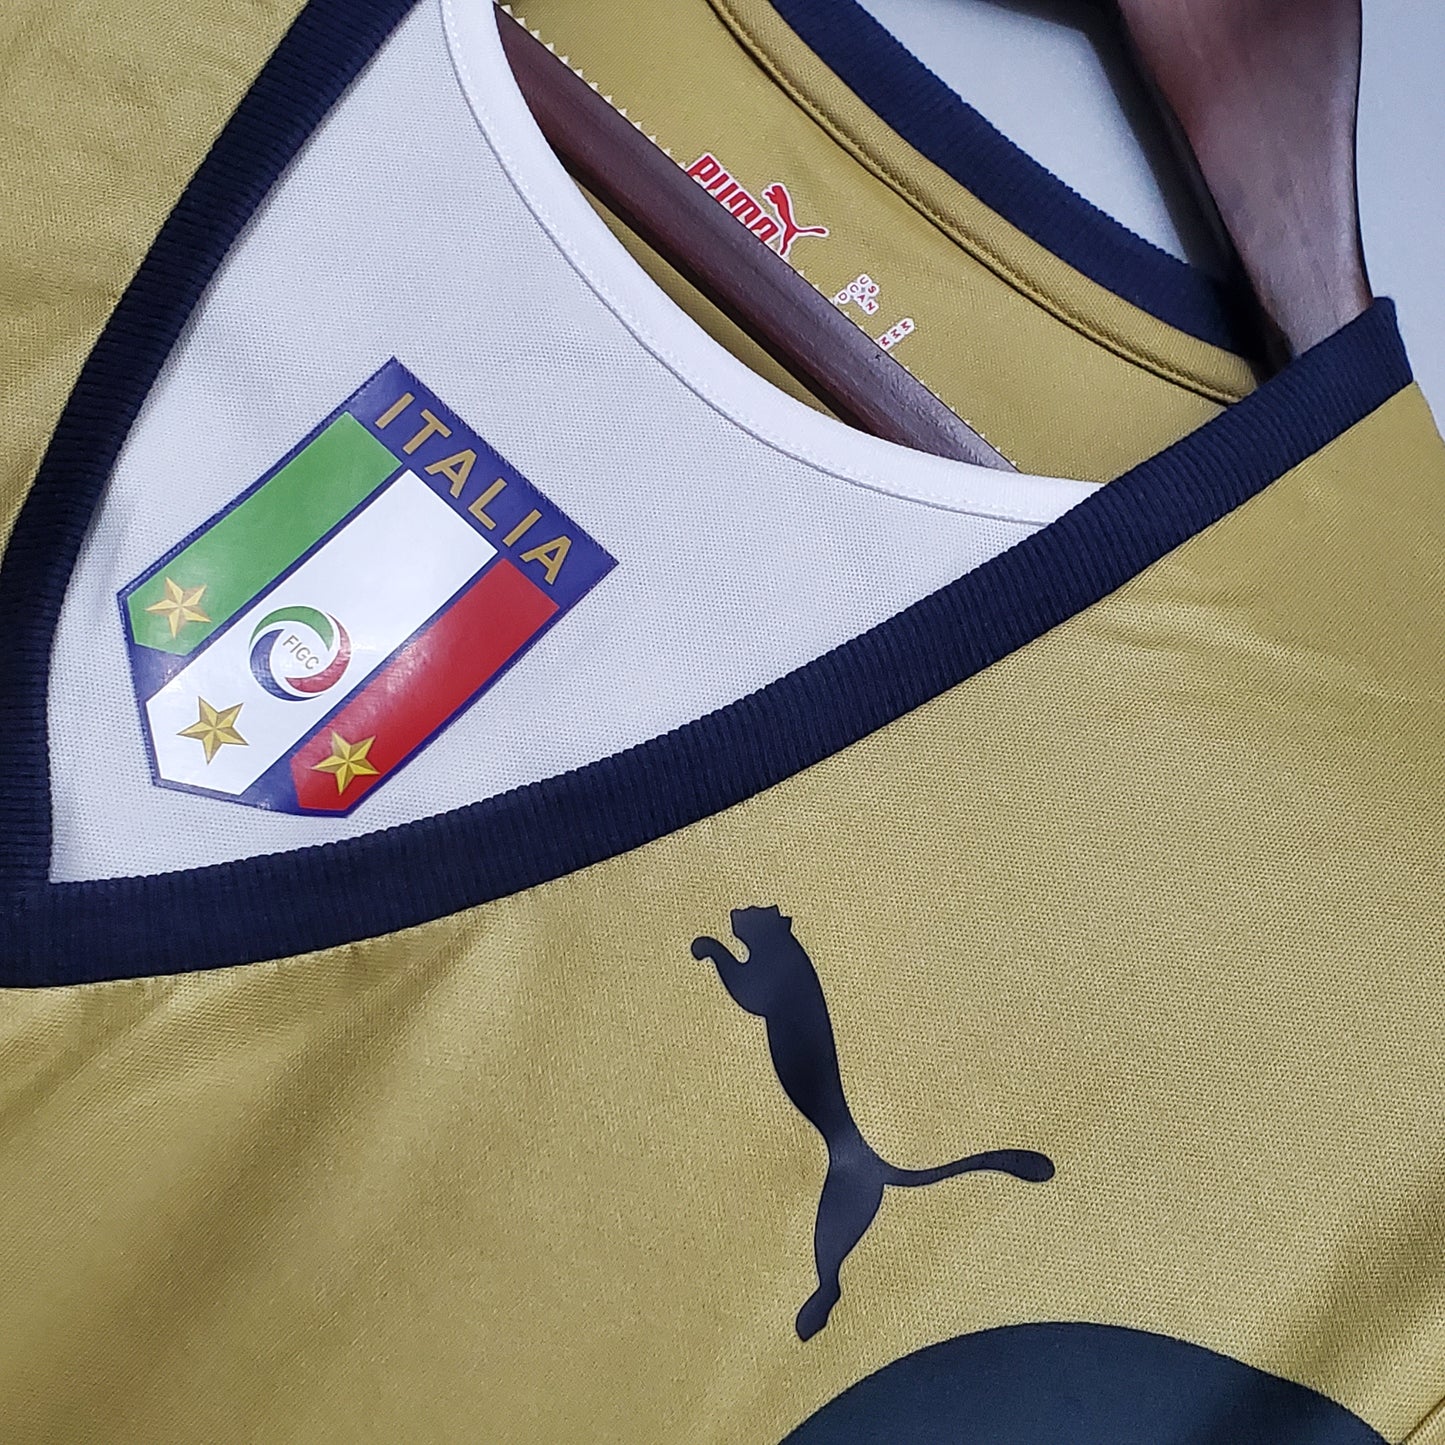 Italy 2006 Goalkeeper Shirt Gold